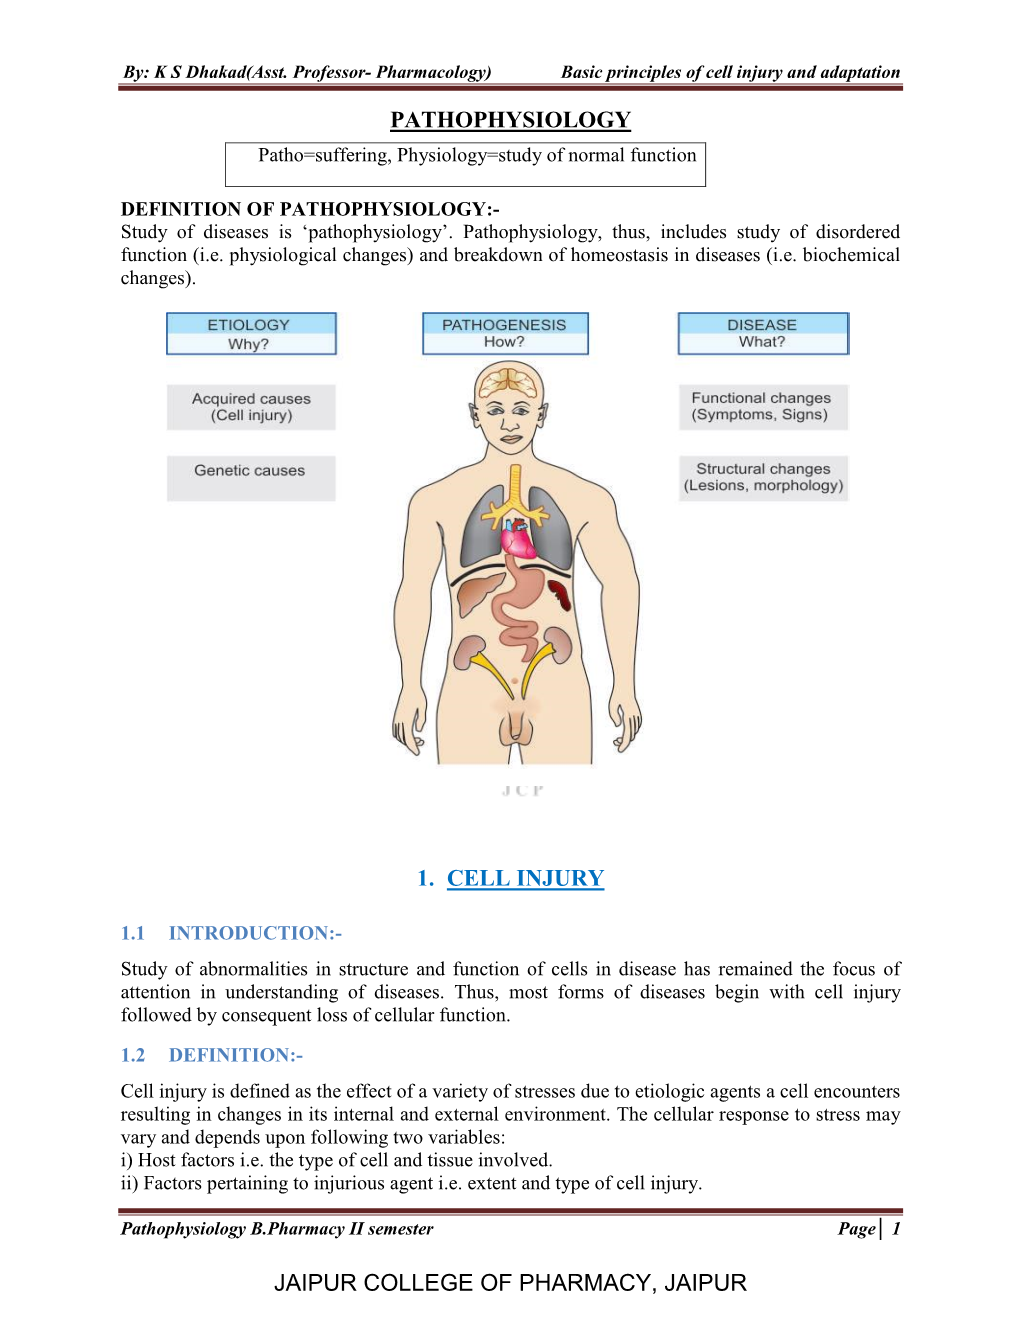 Pathophysiology 1. Cell Injury Jaipur College of Pharmacy, Jaipur